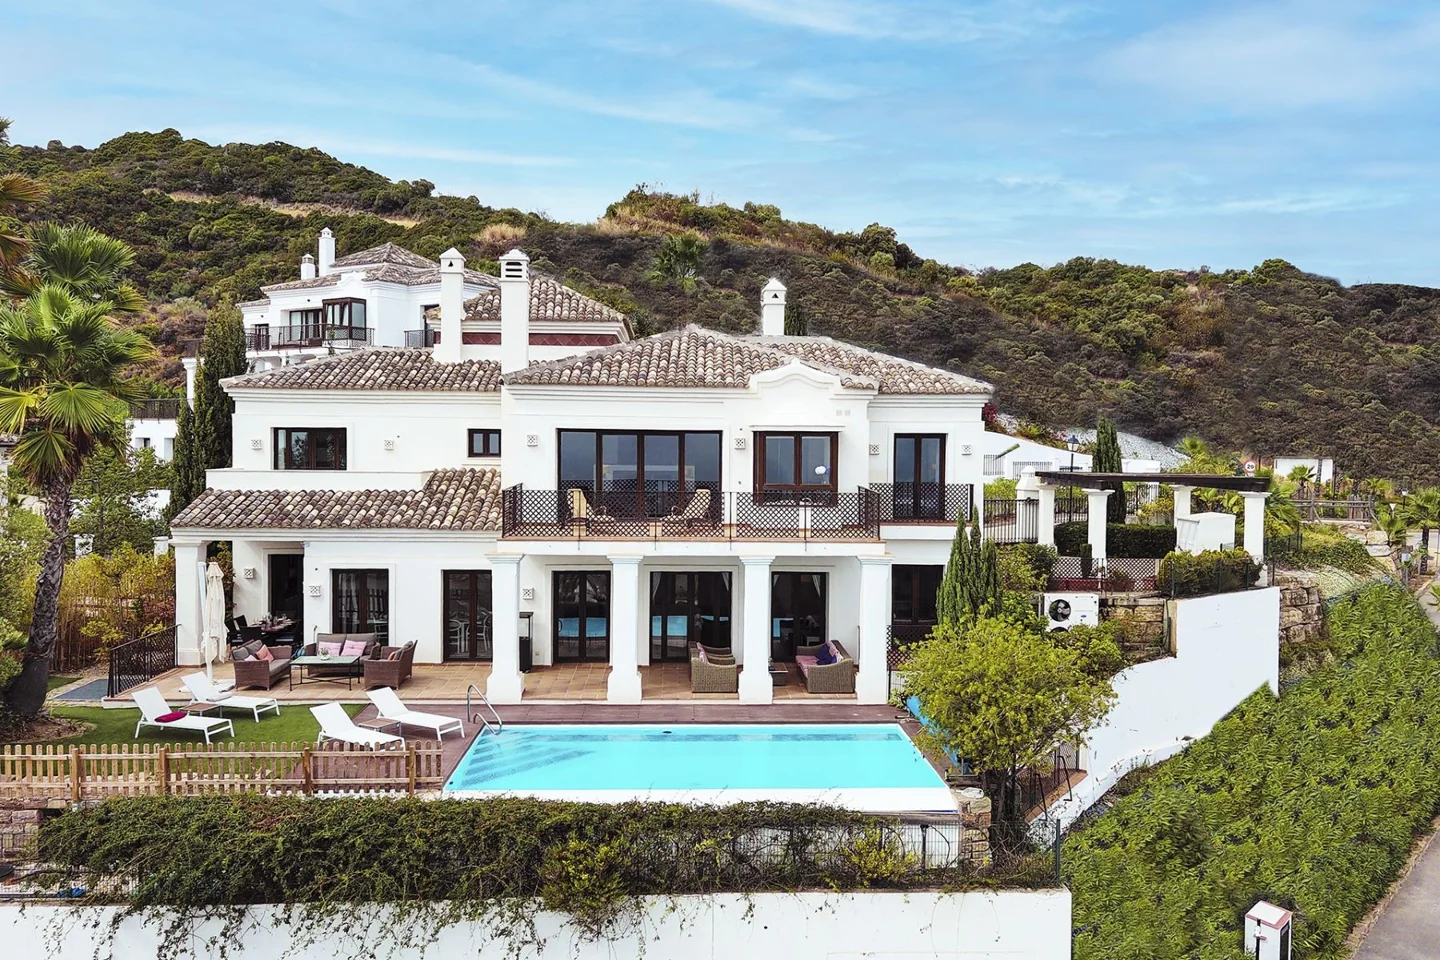 Benahavis Town: Villa de estilo andaluz con increíbles vistas